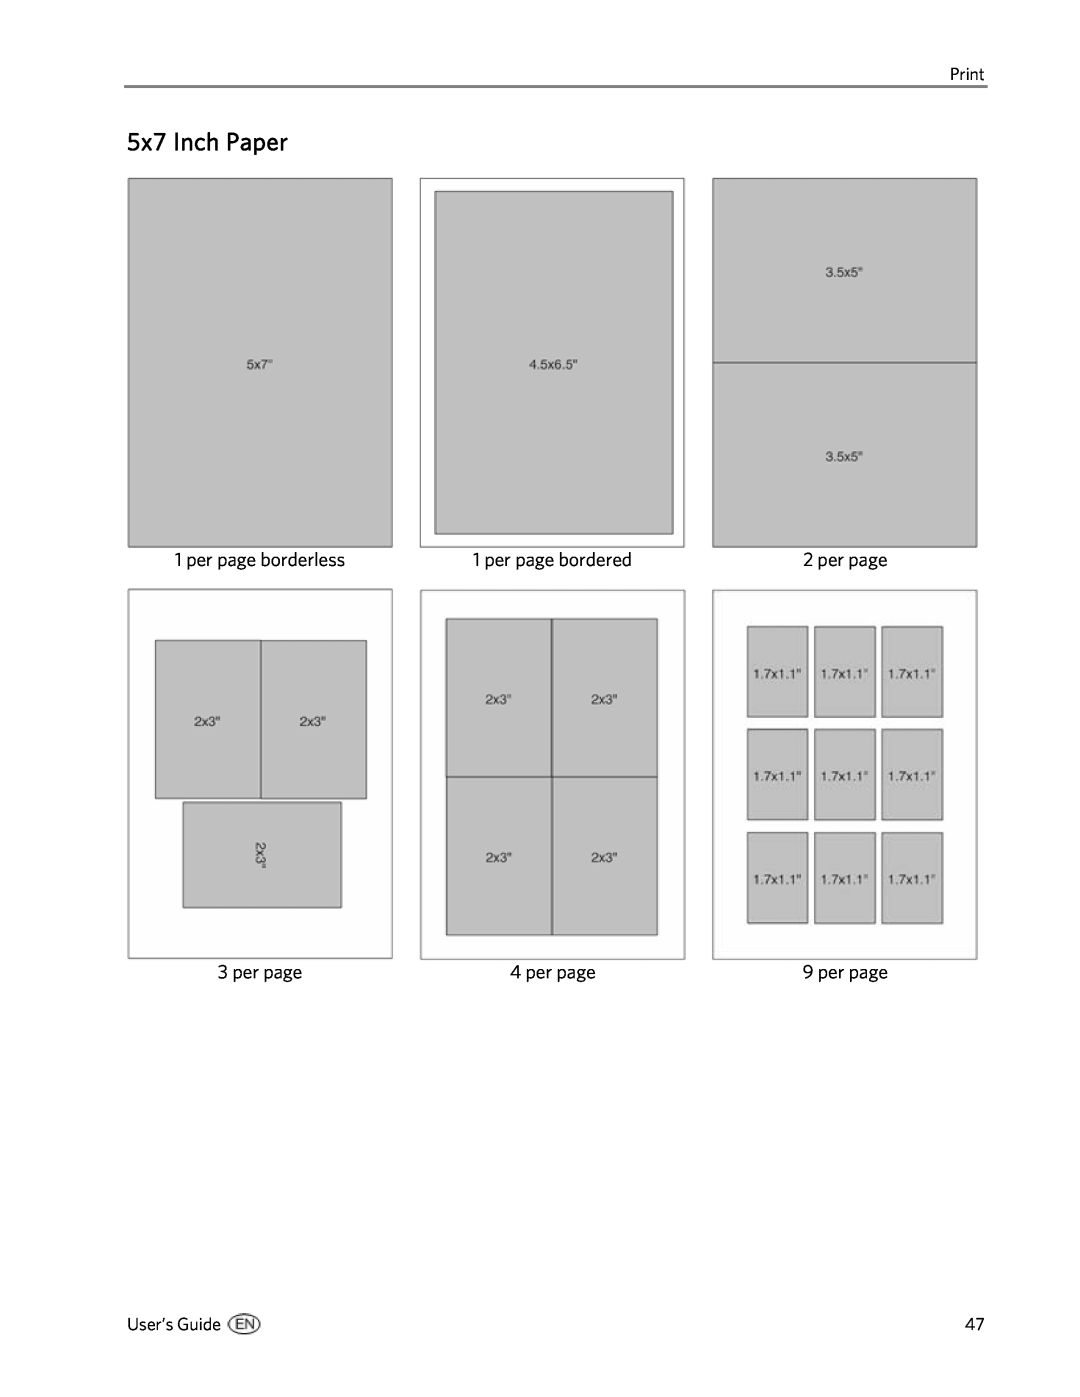 Kodak 5500 manual 5x7 Inch Paper, Print, per page, User’s Guide 